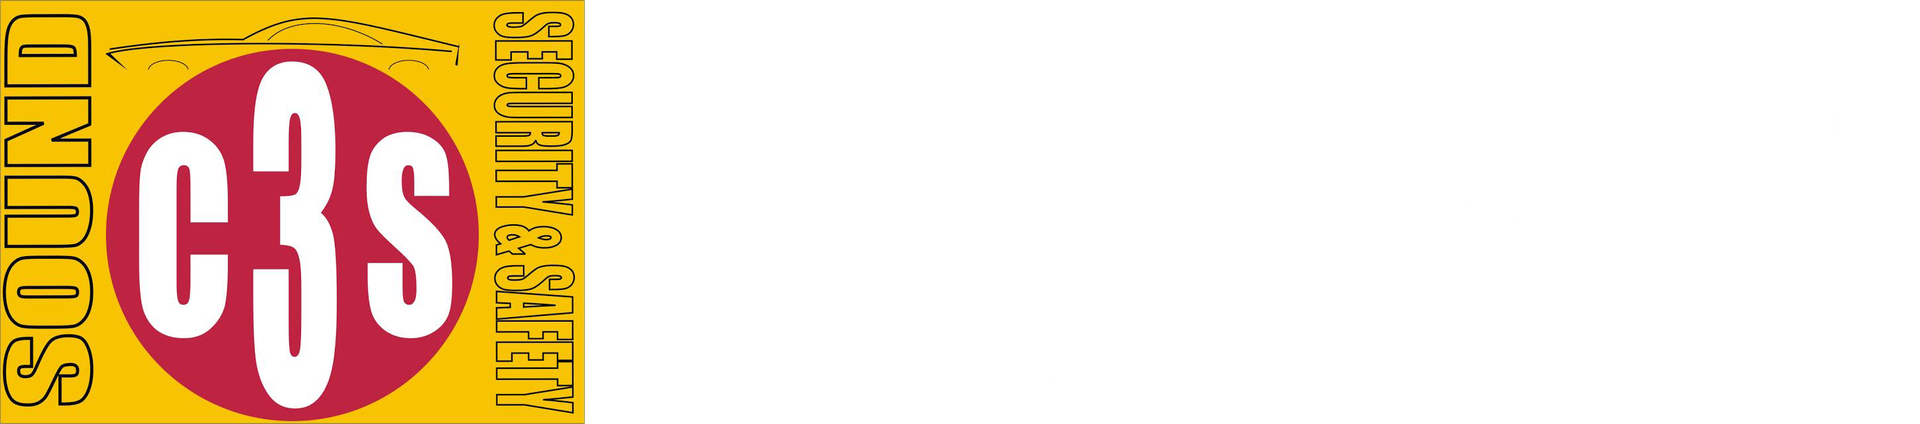 Car Sound Security & Safety